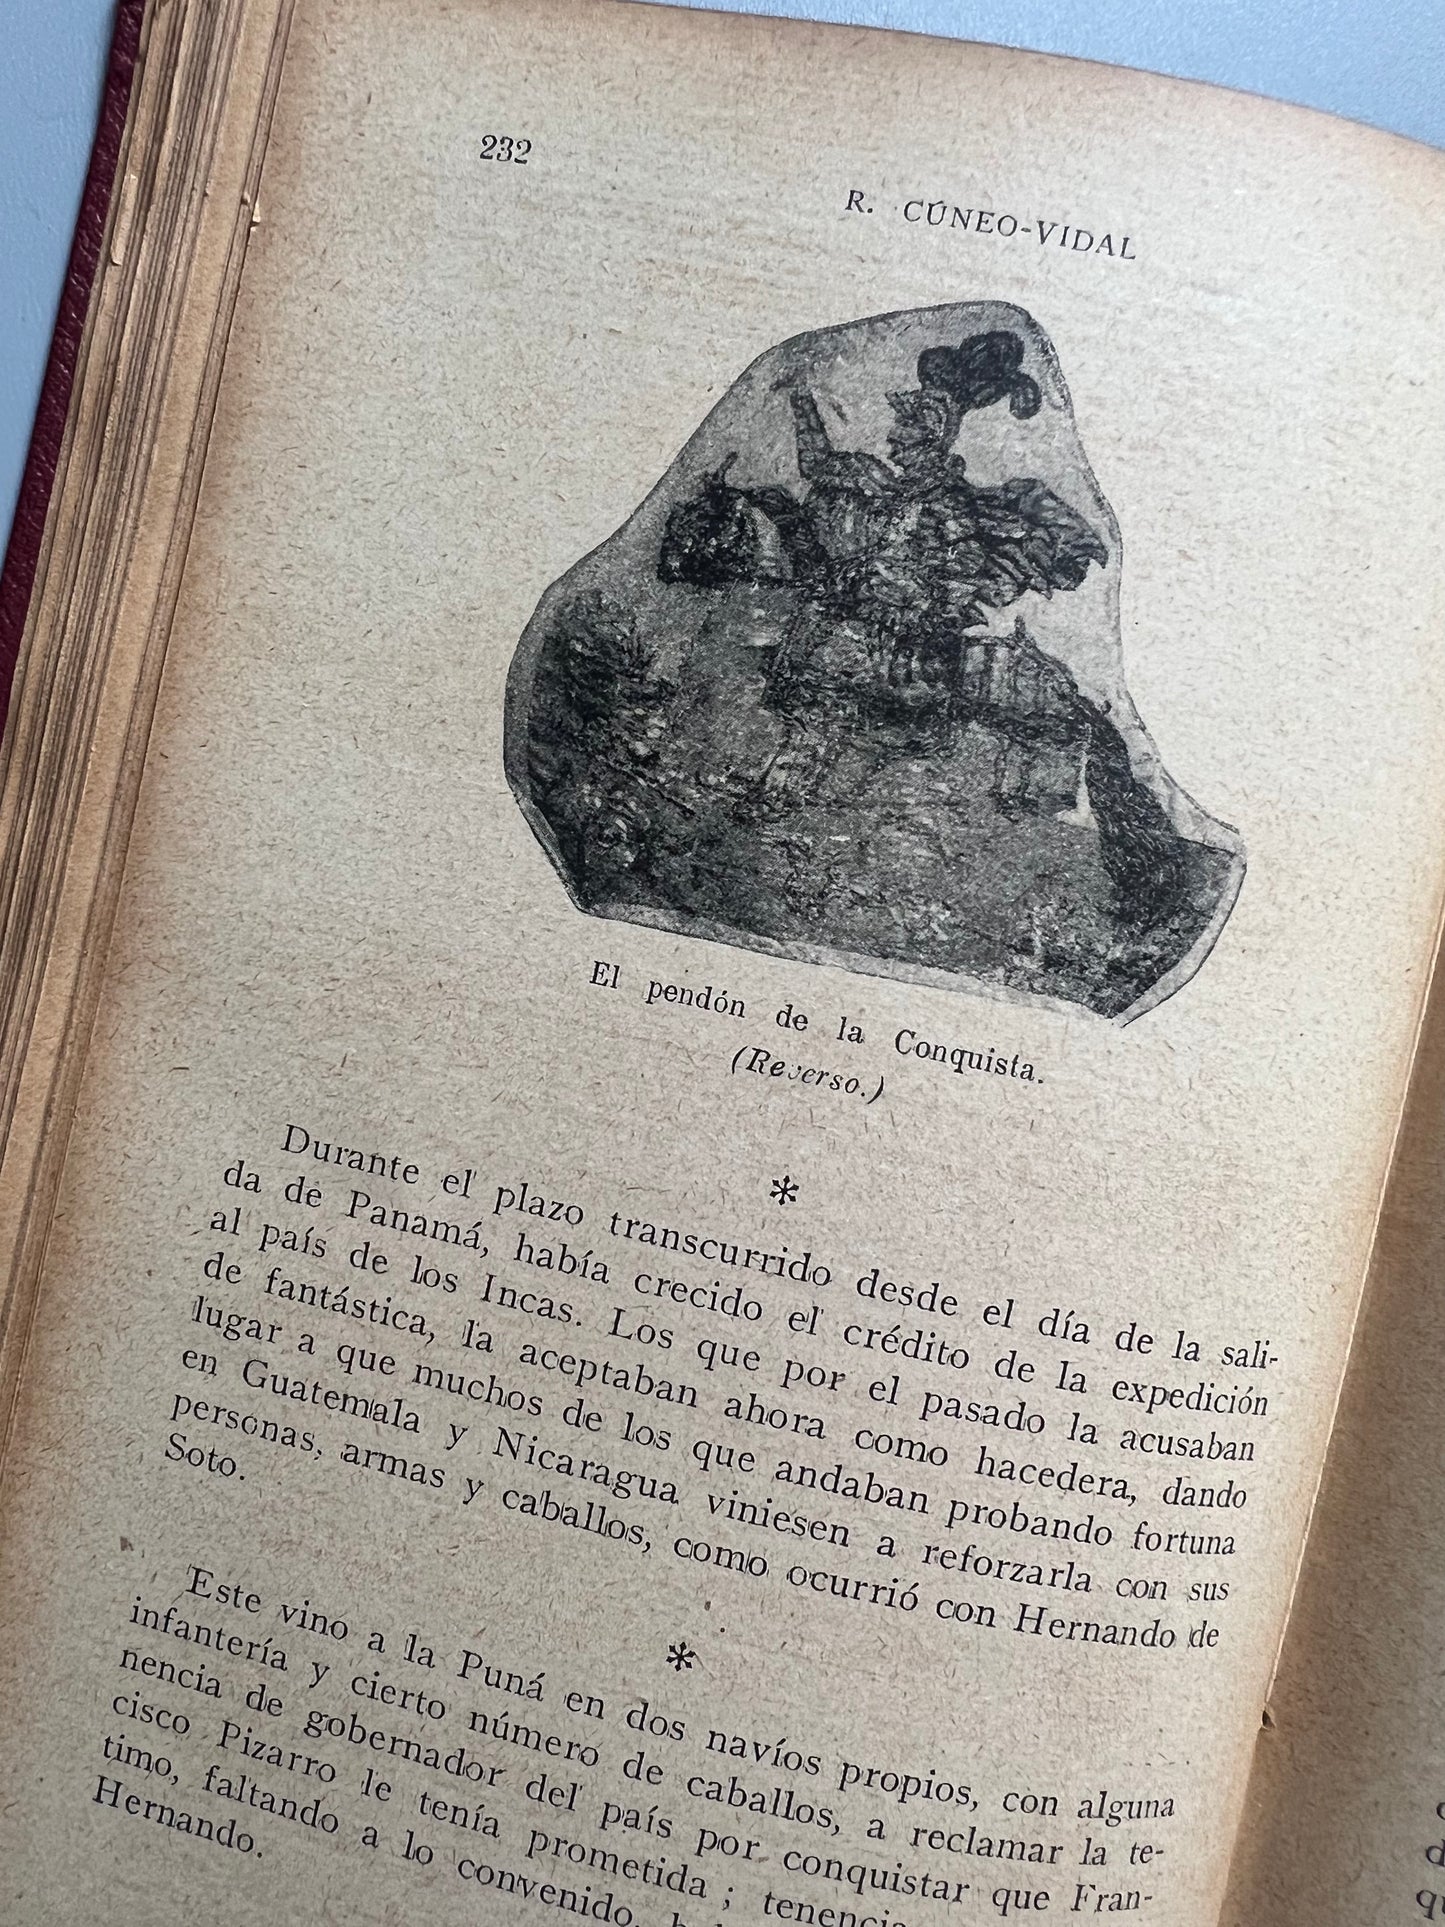 Vida del conquistador del Perú don Francisco Pizarro, Rómulo Cúneo-Vidal - Casa editorial Maucci, ca. 1915